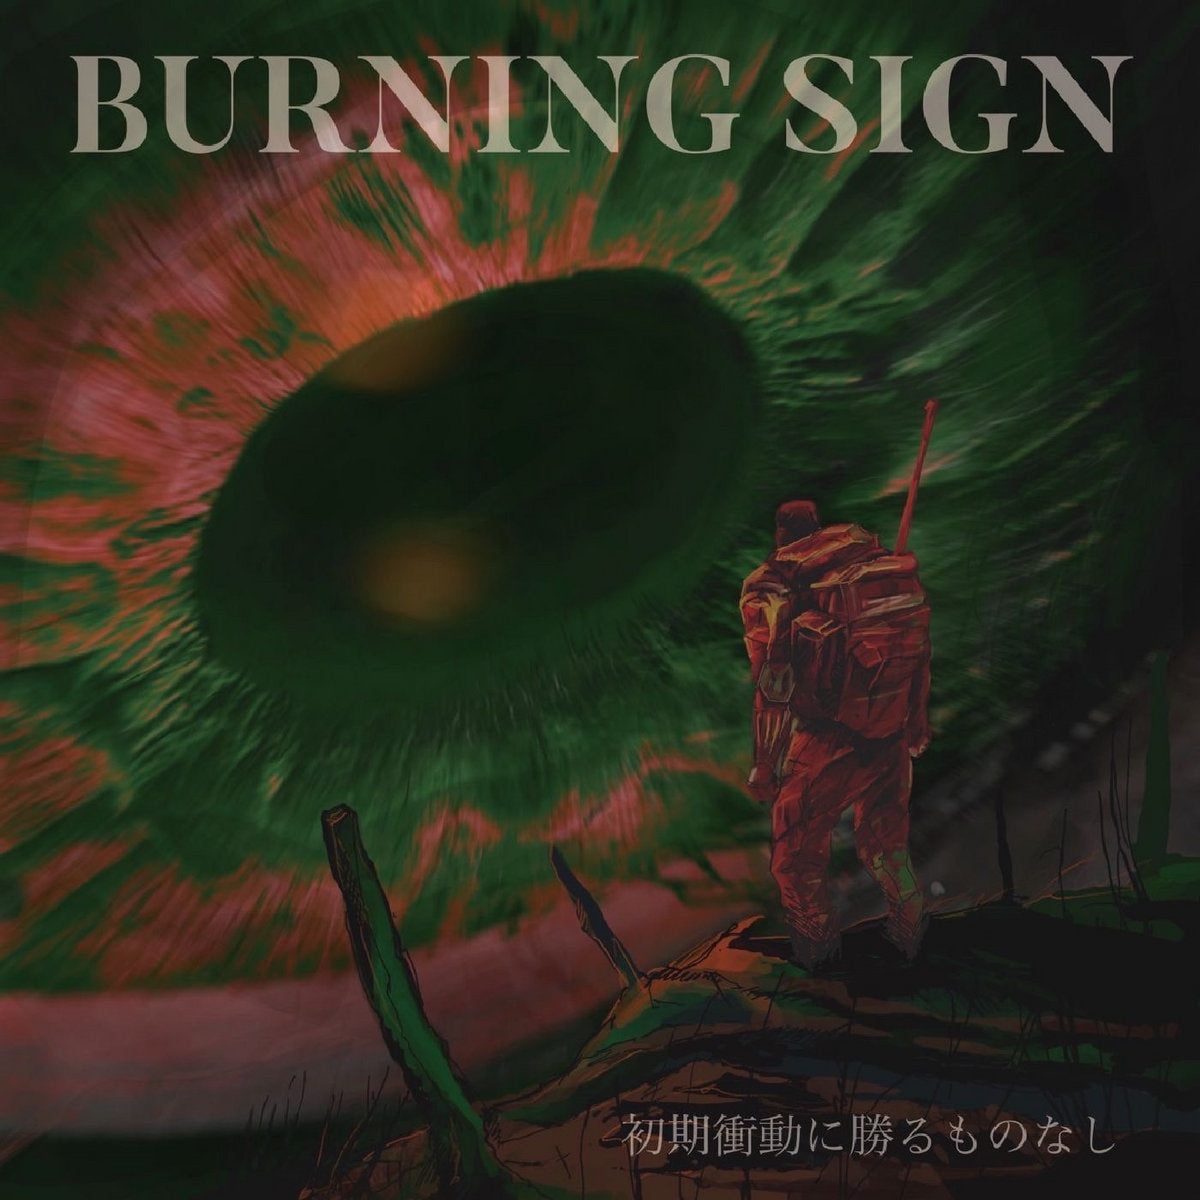 BURNING SIGN - "初期衝動に勝るものなし(Nothing beats the initial impulse)" (CD)